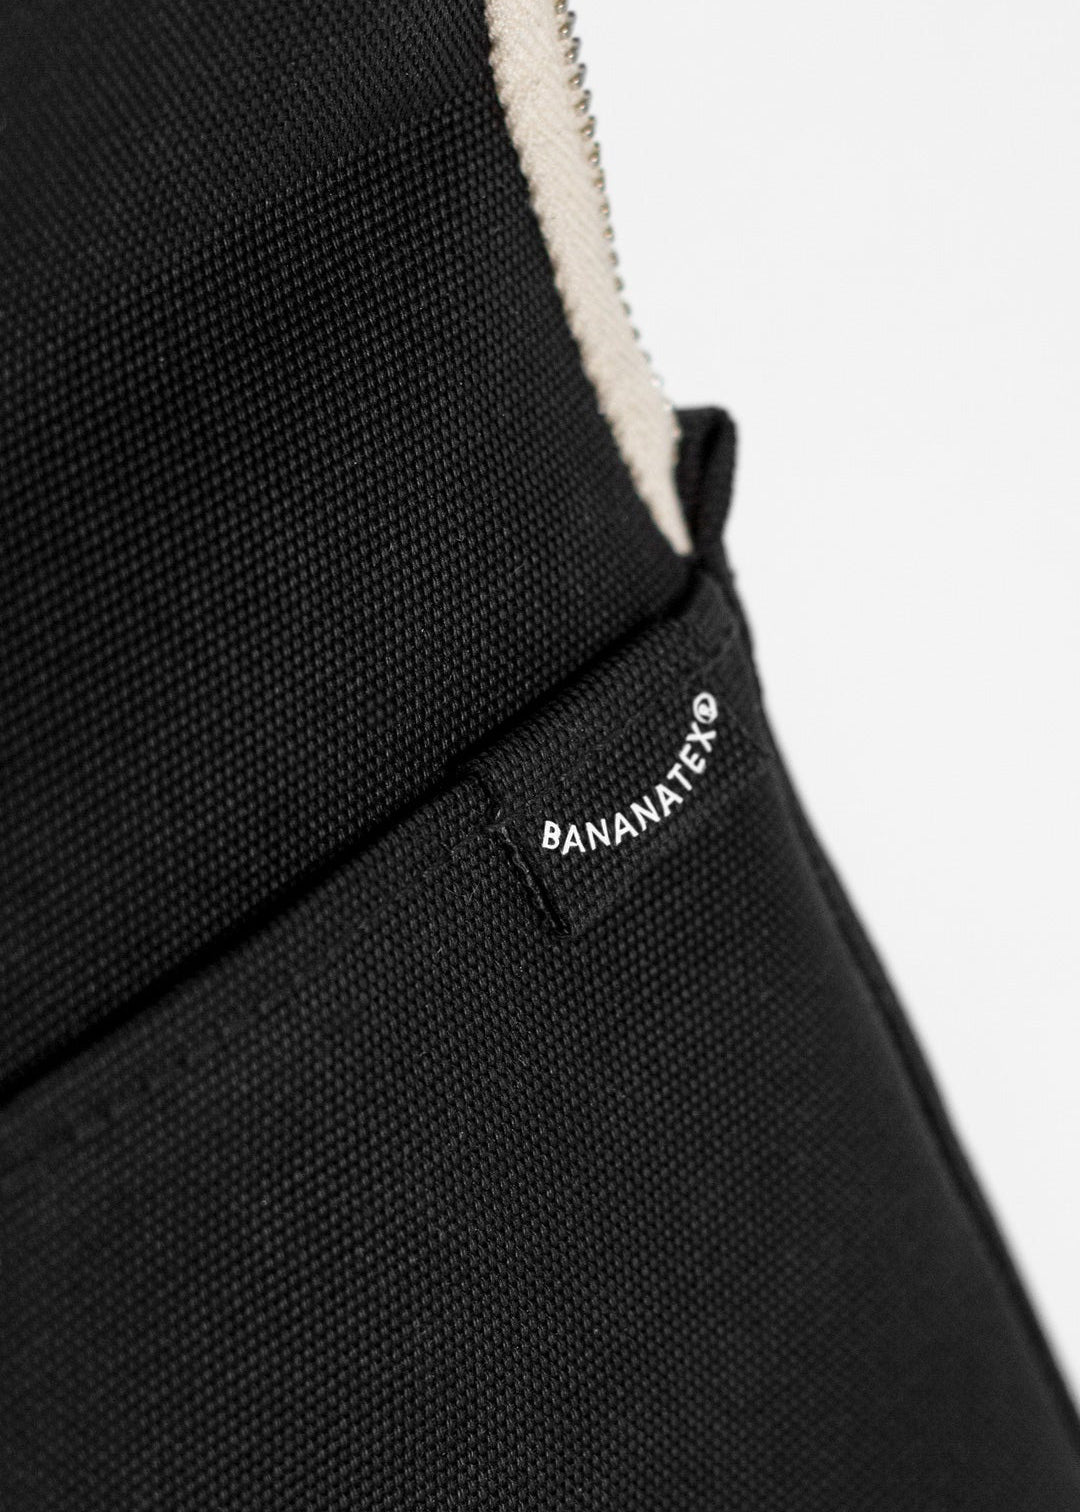 Bananatex Sleeve for Macbook 15" – All Black